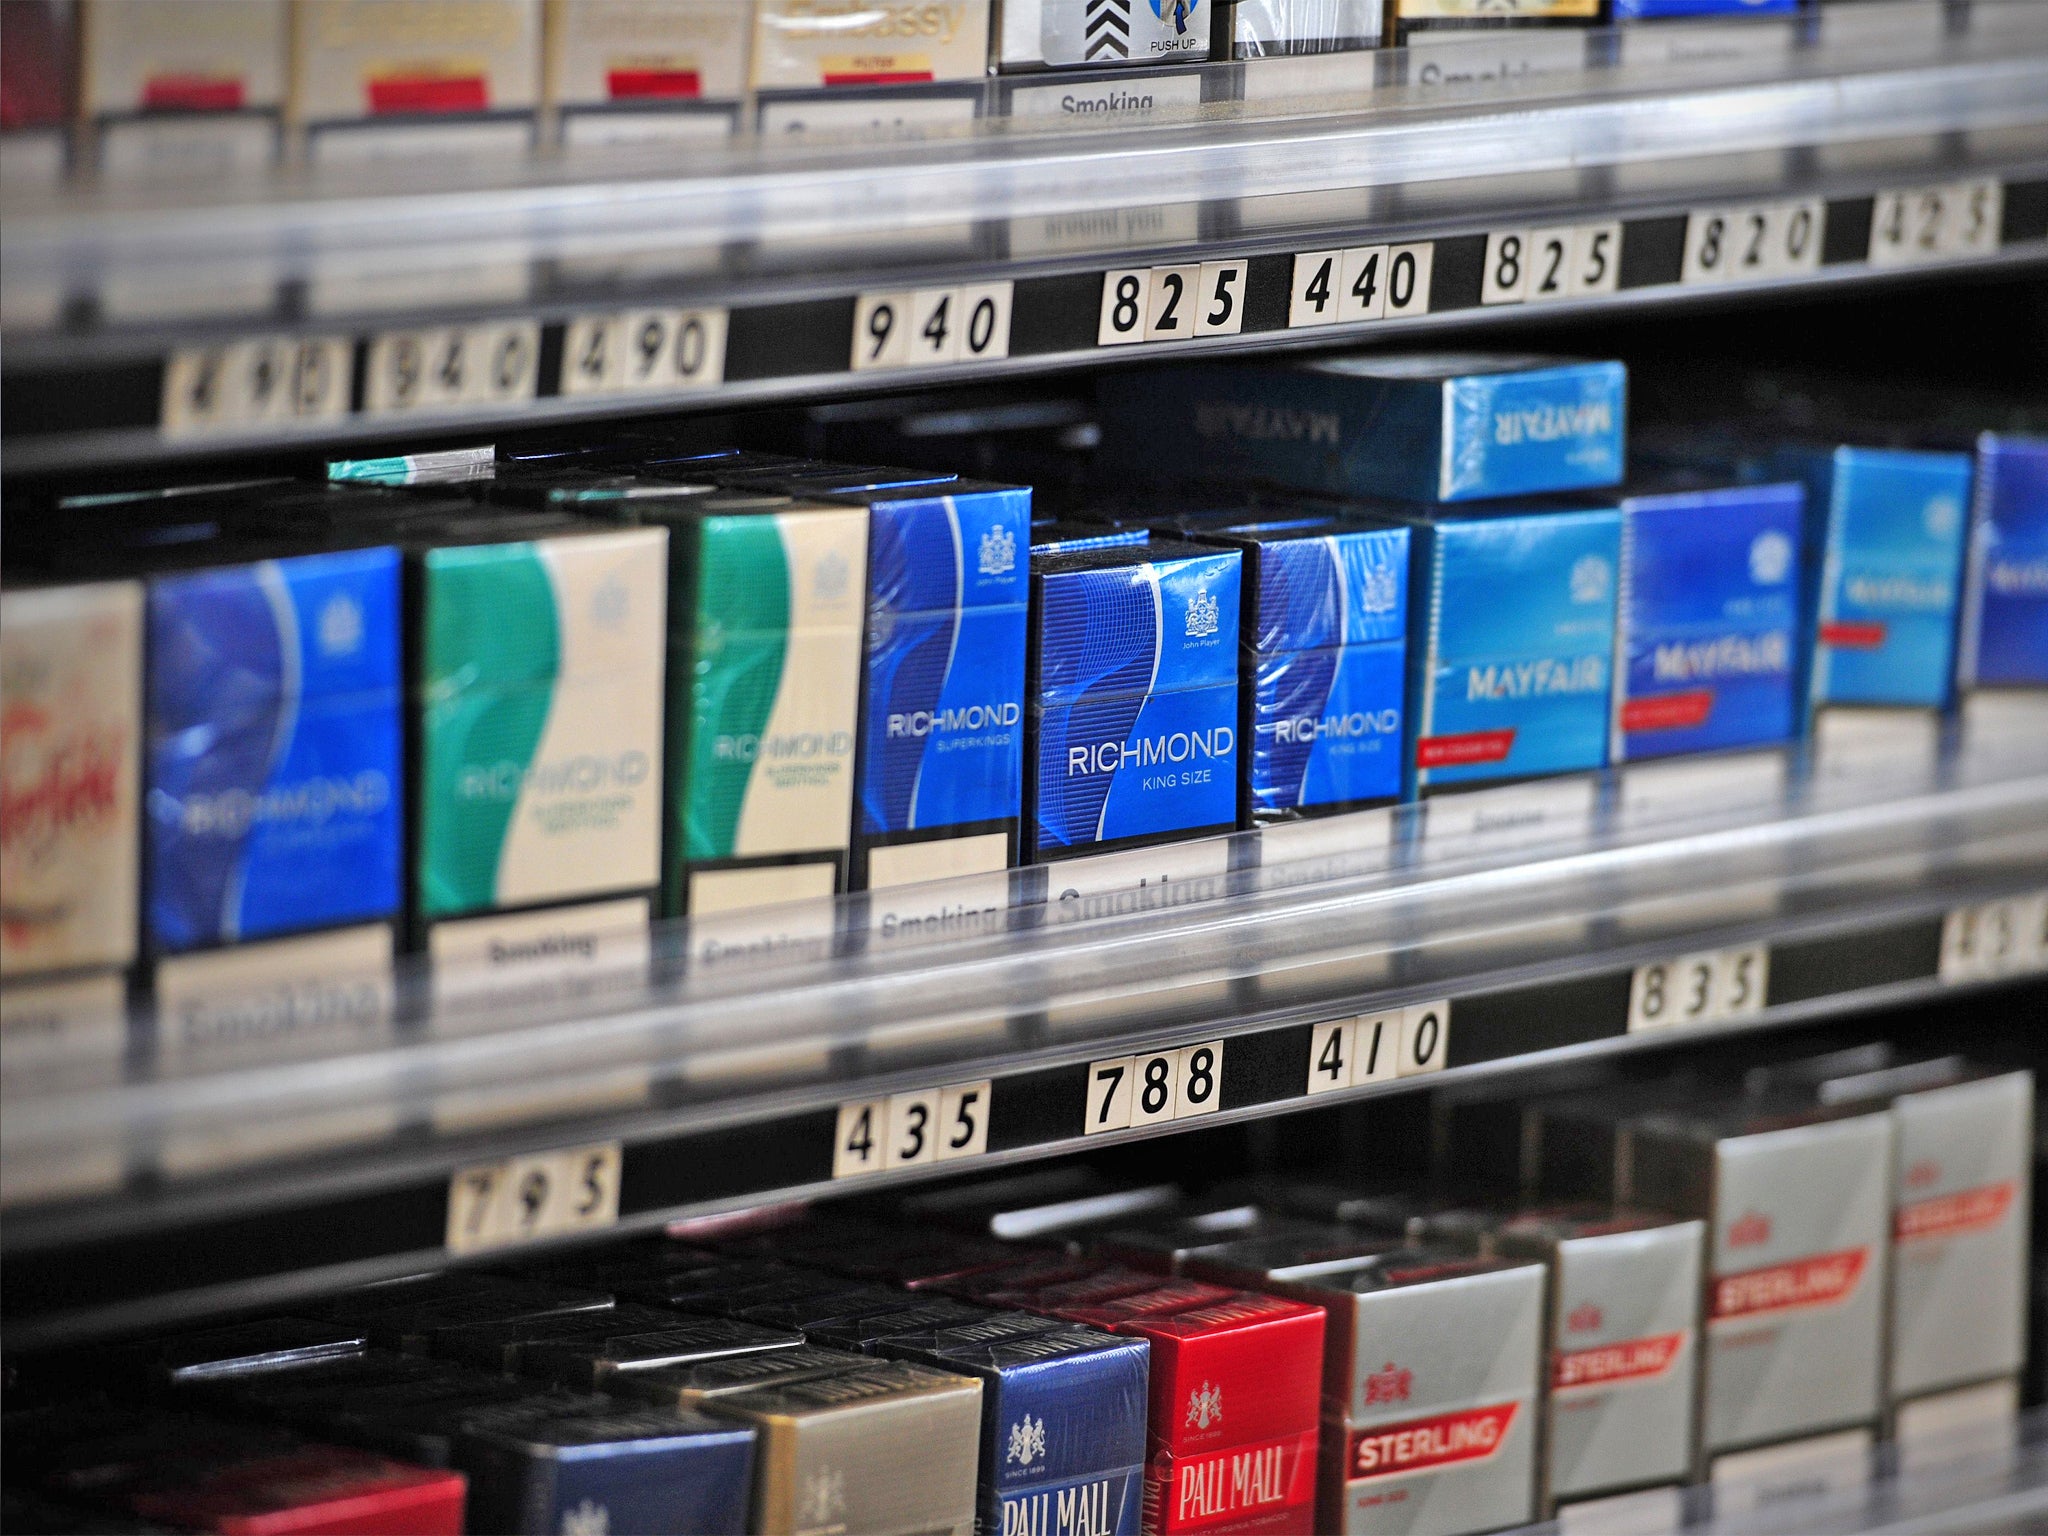 Britain last week postponed plans to introduce plain packaging on cigarettes